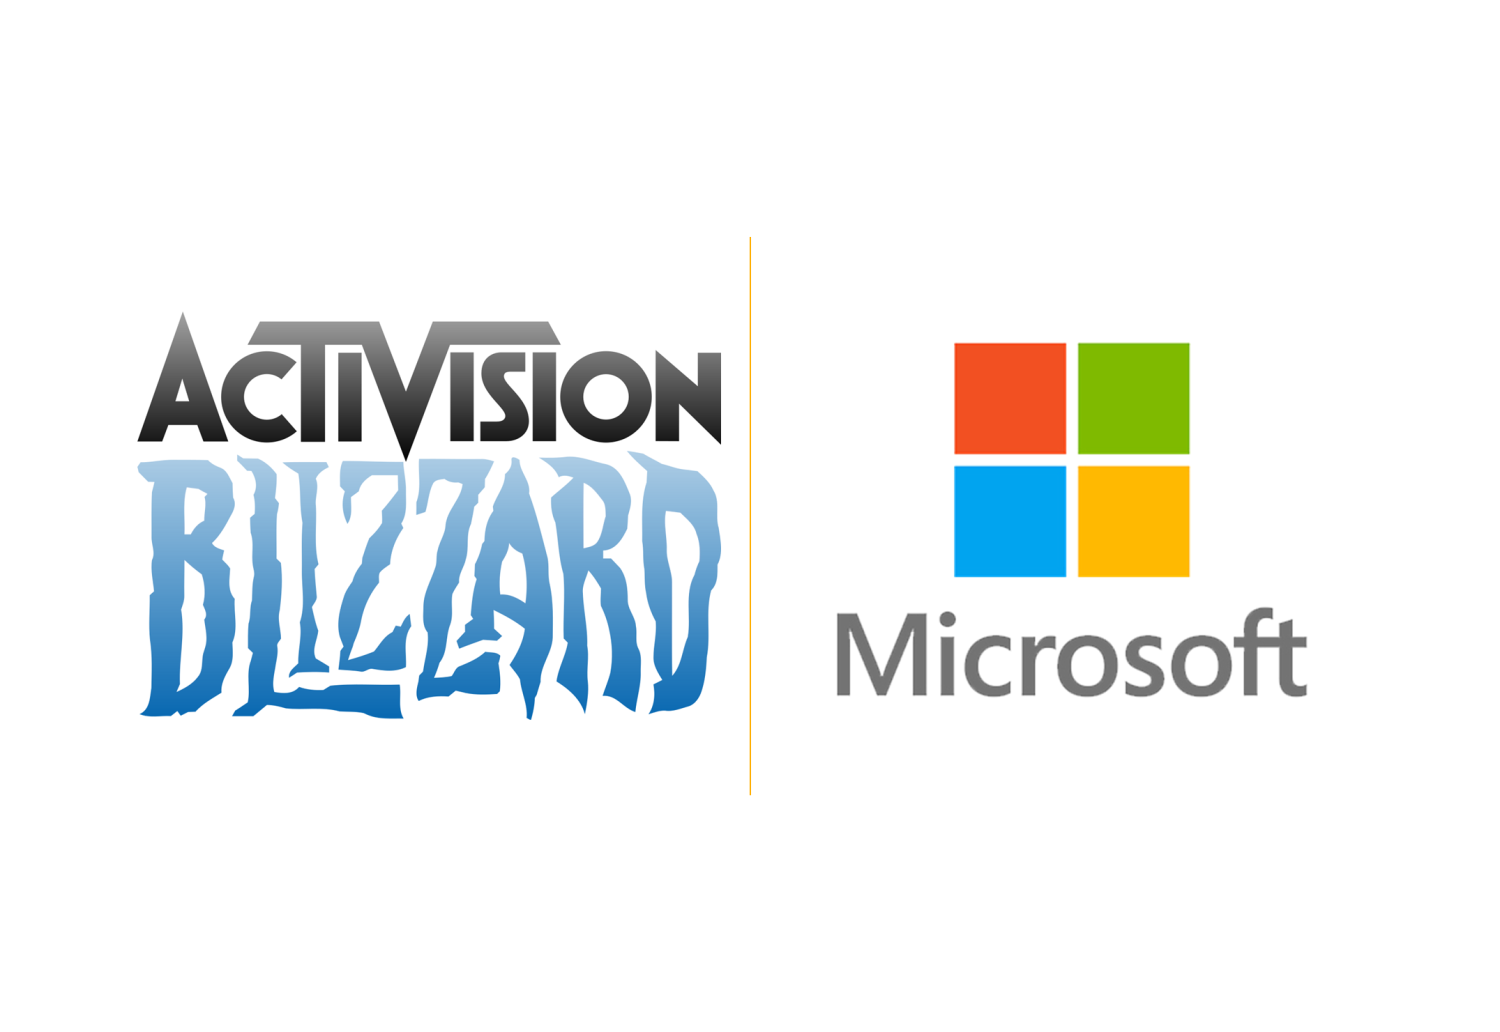 Microsoft buys Activision Blizzard for $70 Billion